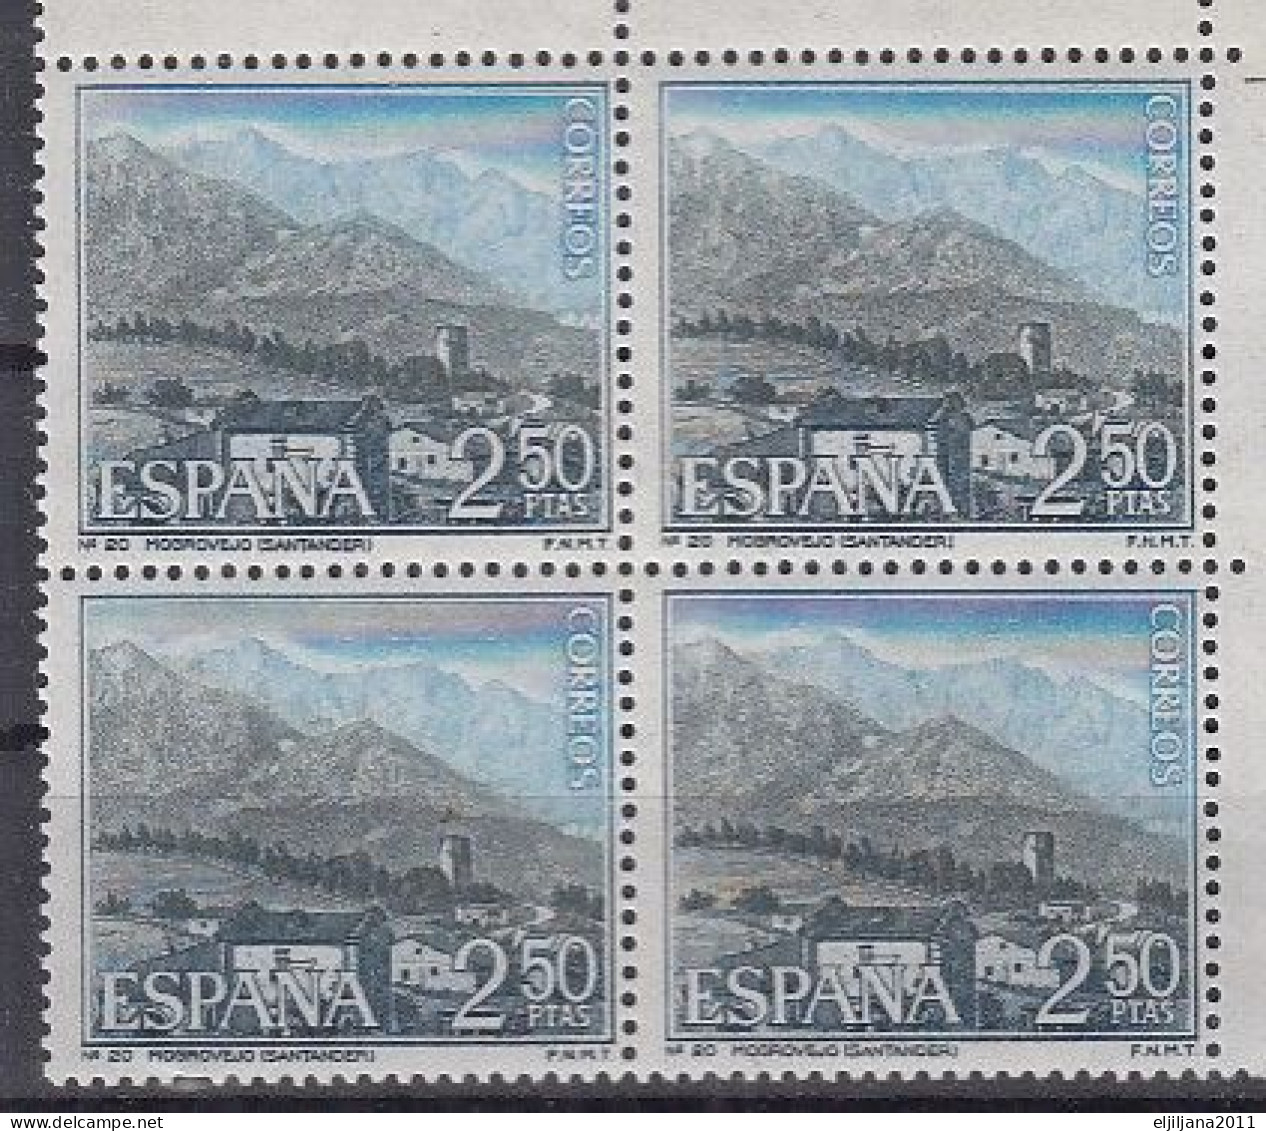 ⁕ SPAIN / ESPANA 1965 ⁕ Mogrovejo - Santander Mi.1589 ⁕ MNH Block Of 4 - Unused Stamps